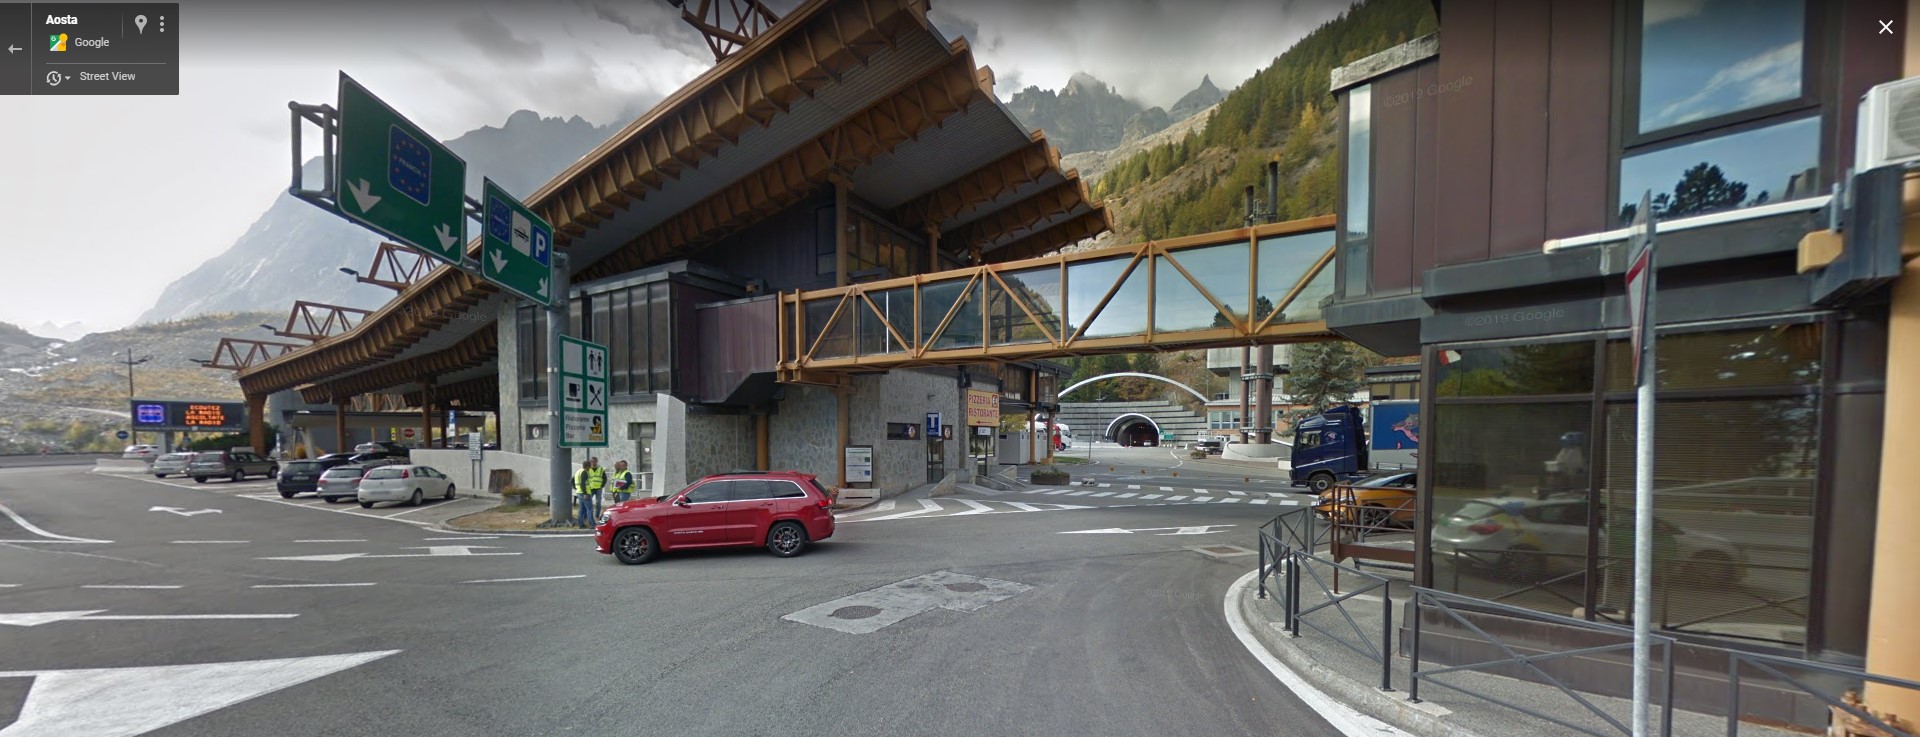 Google Streetview Mont Blanc tunnel control